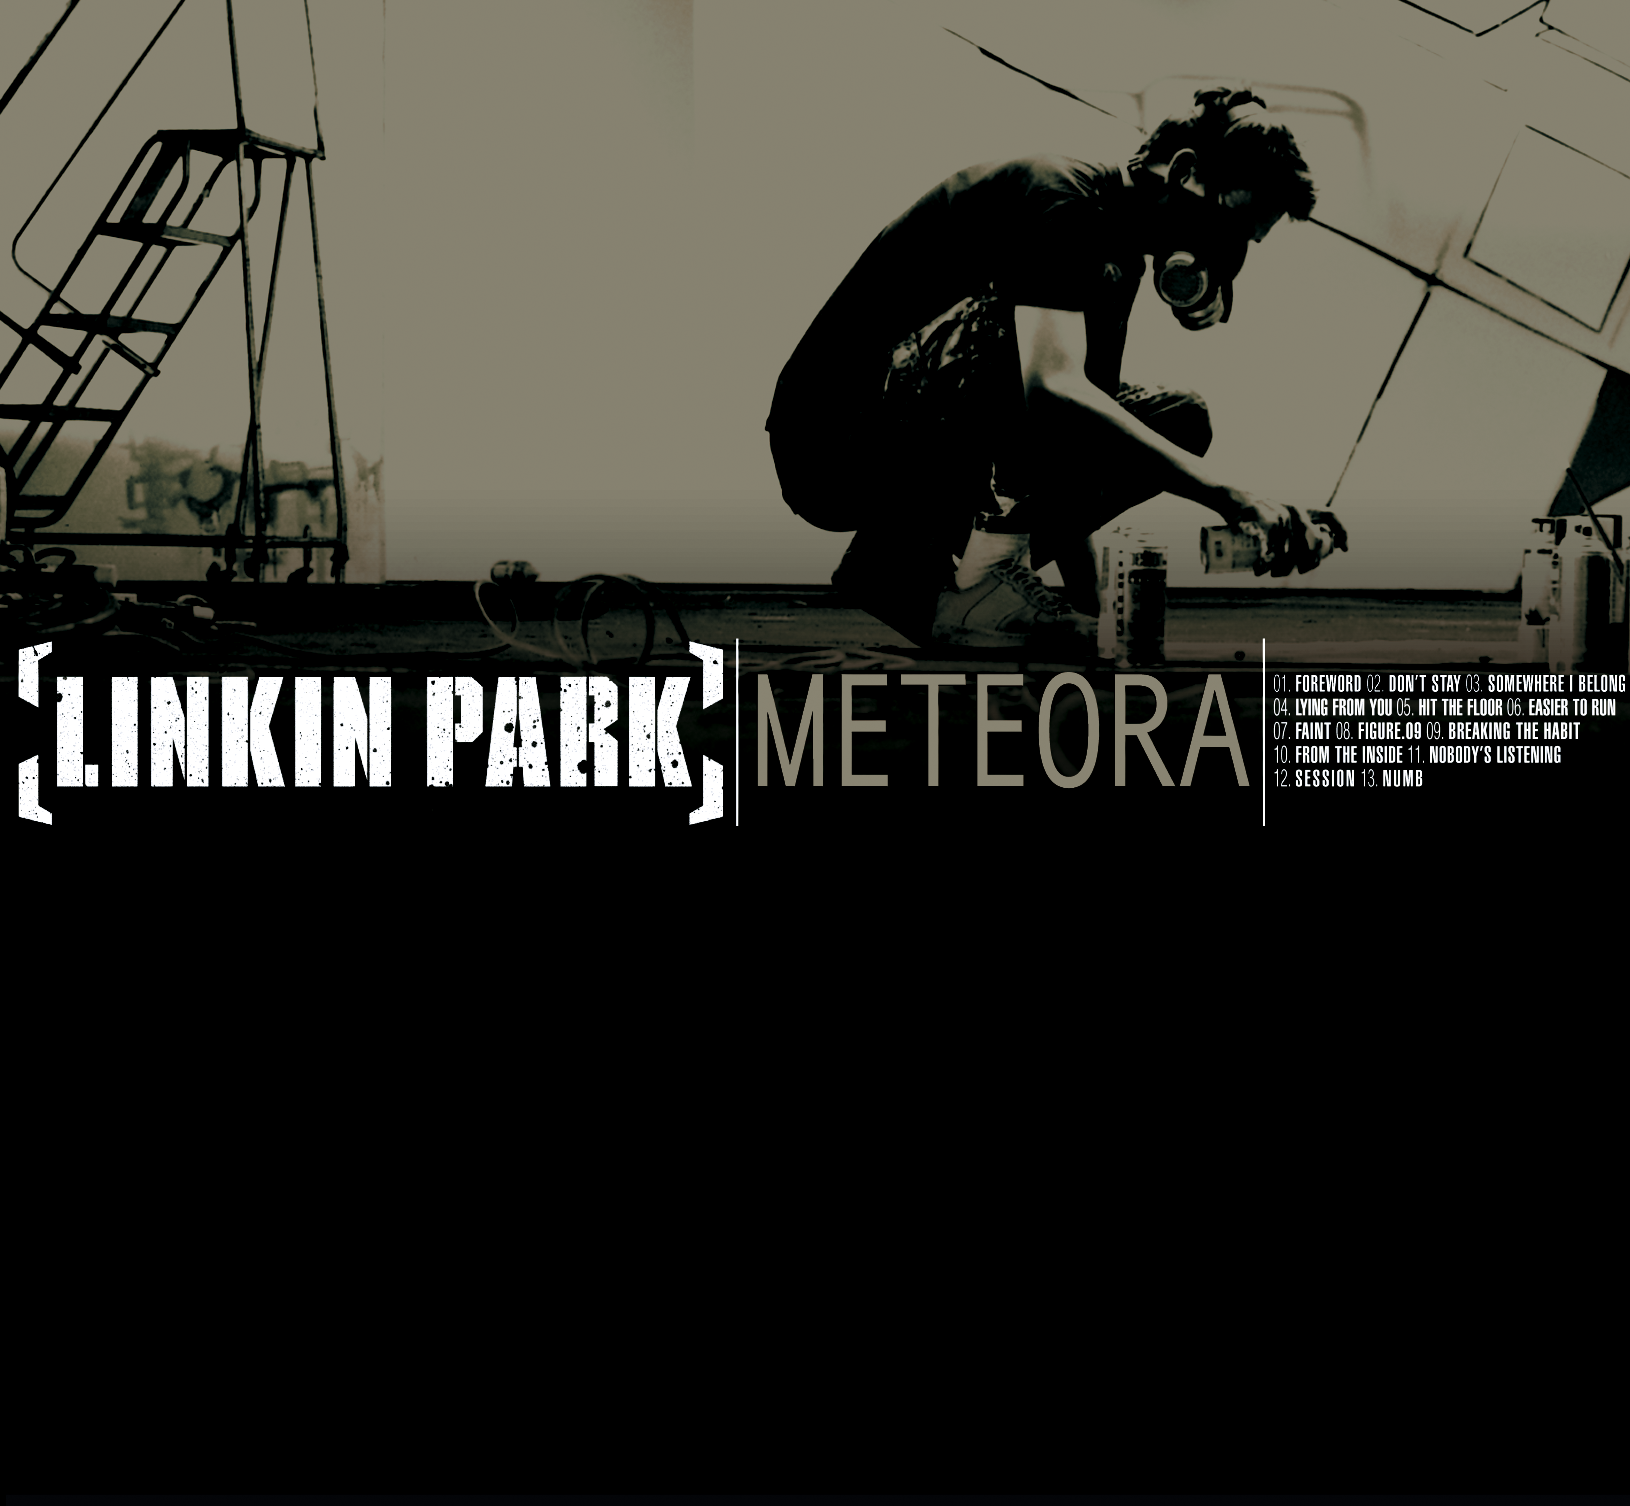 Linkin Park - Meteora: Limited Gold & Red Splatter Vinyl LP